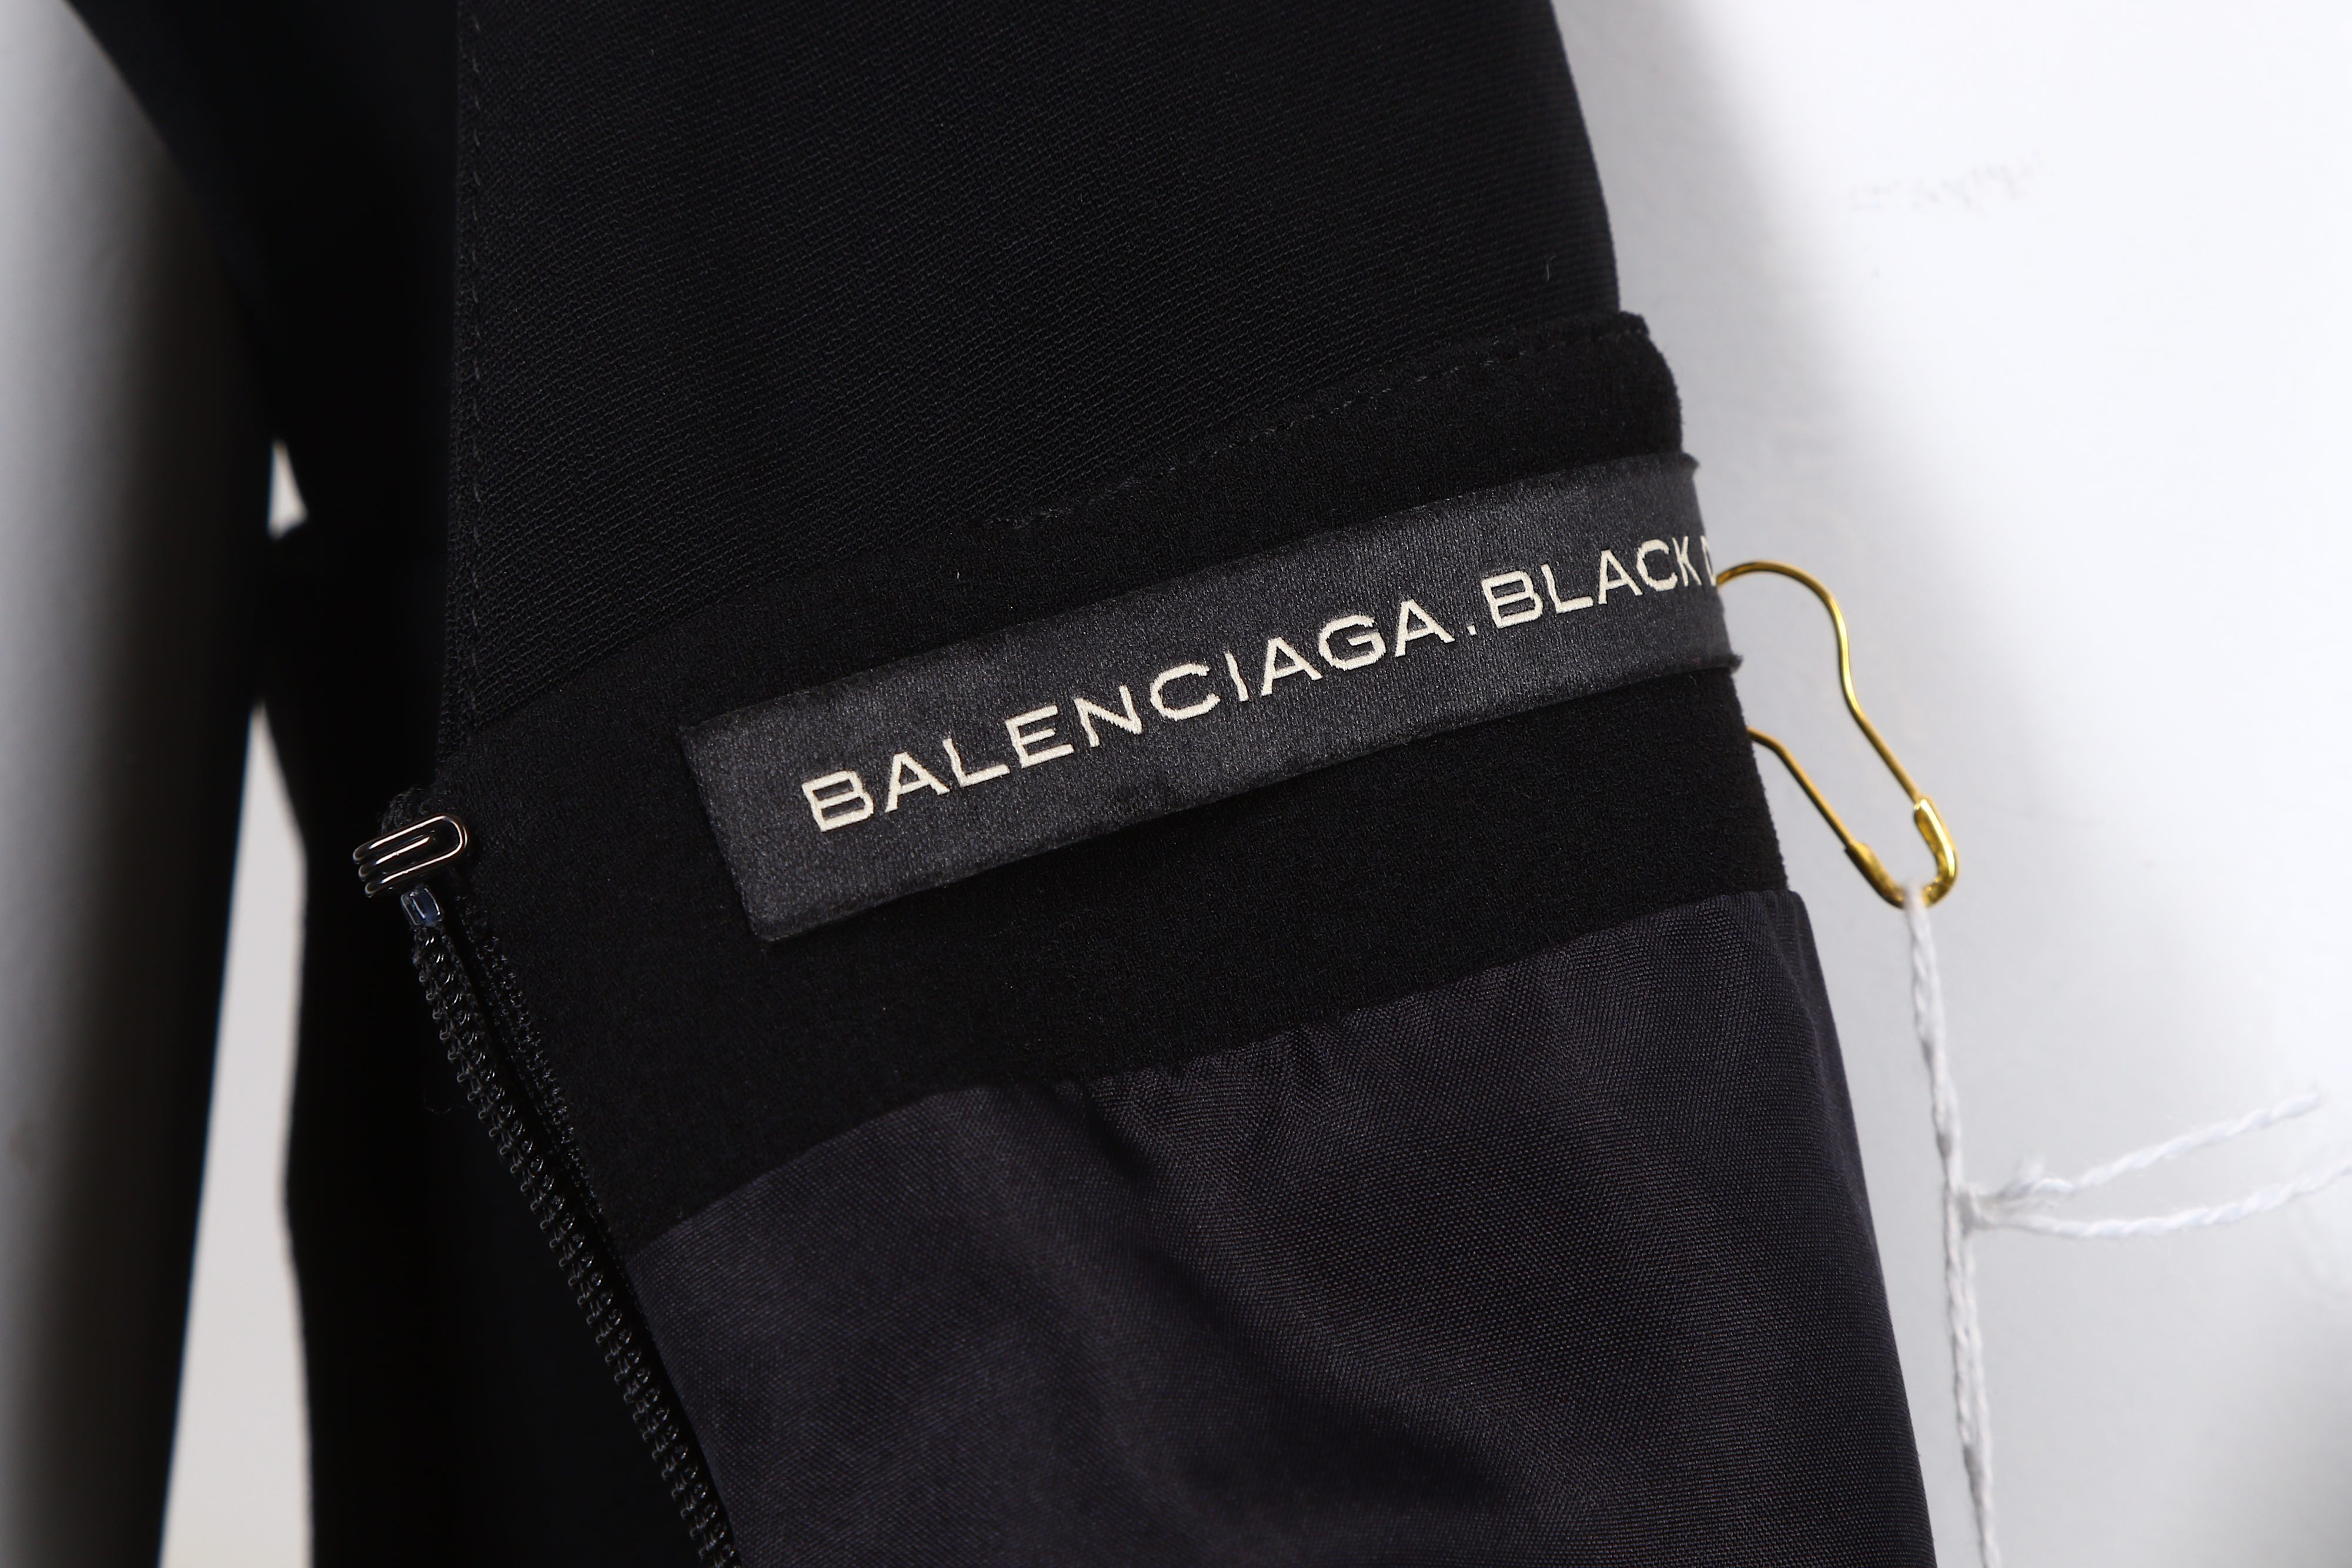 Balenciaga Black Dress - Image 5 of 5